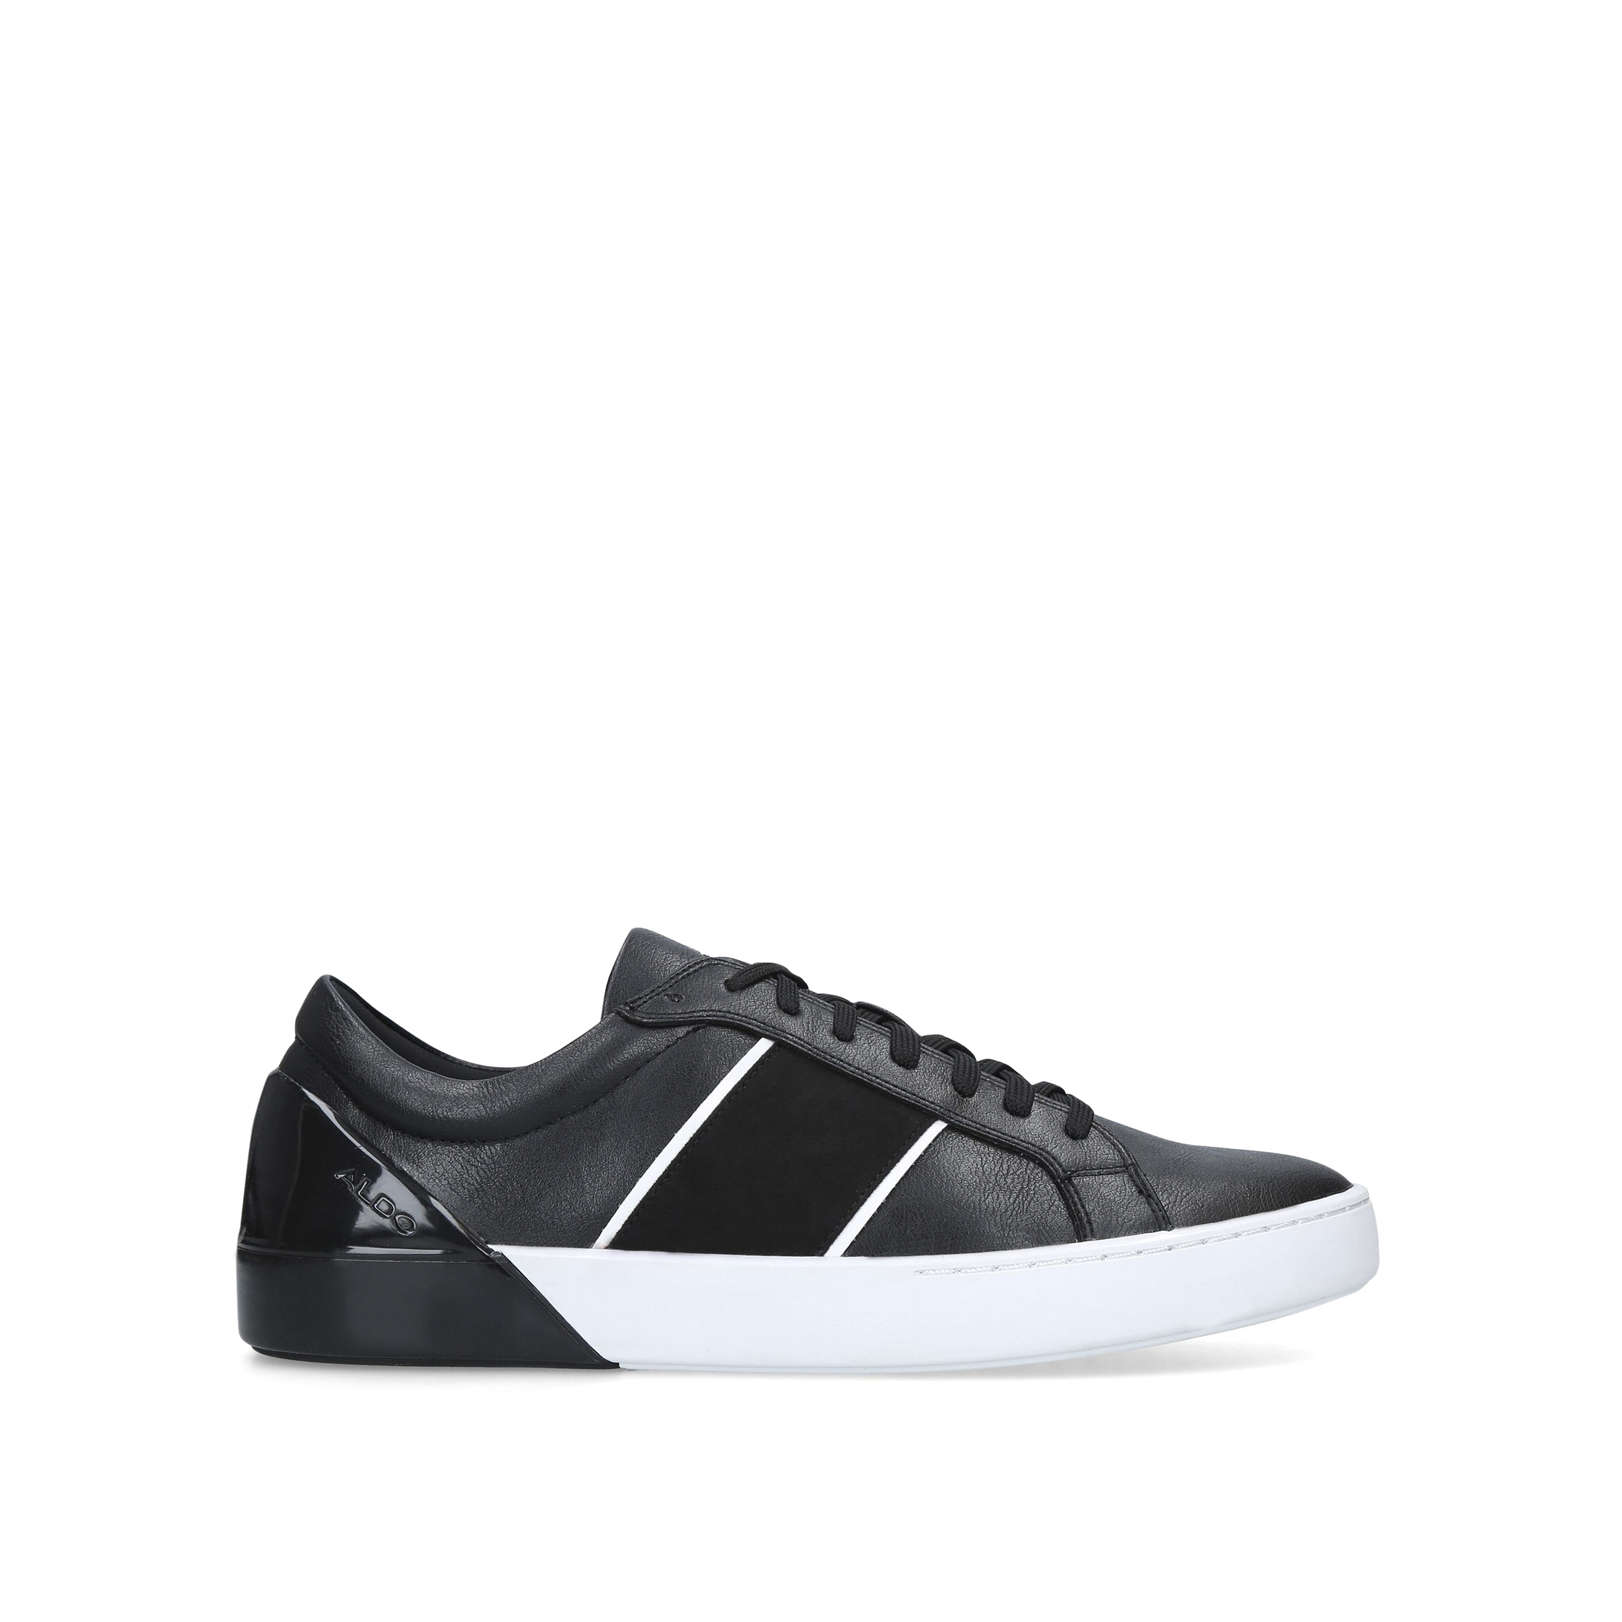 AERAN - ALDO Sneakers